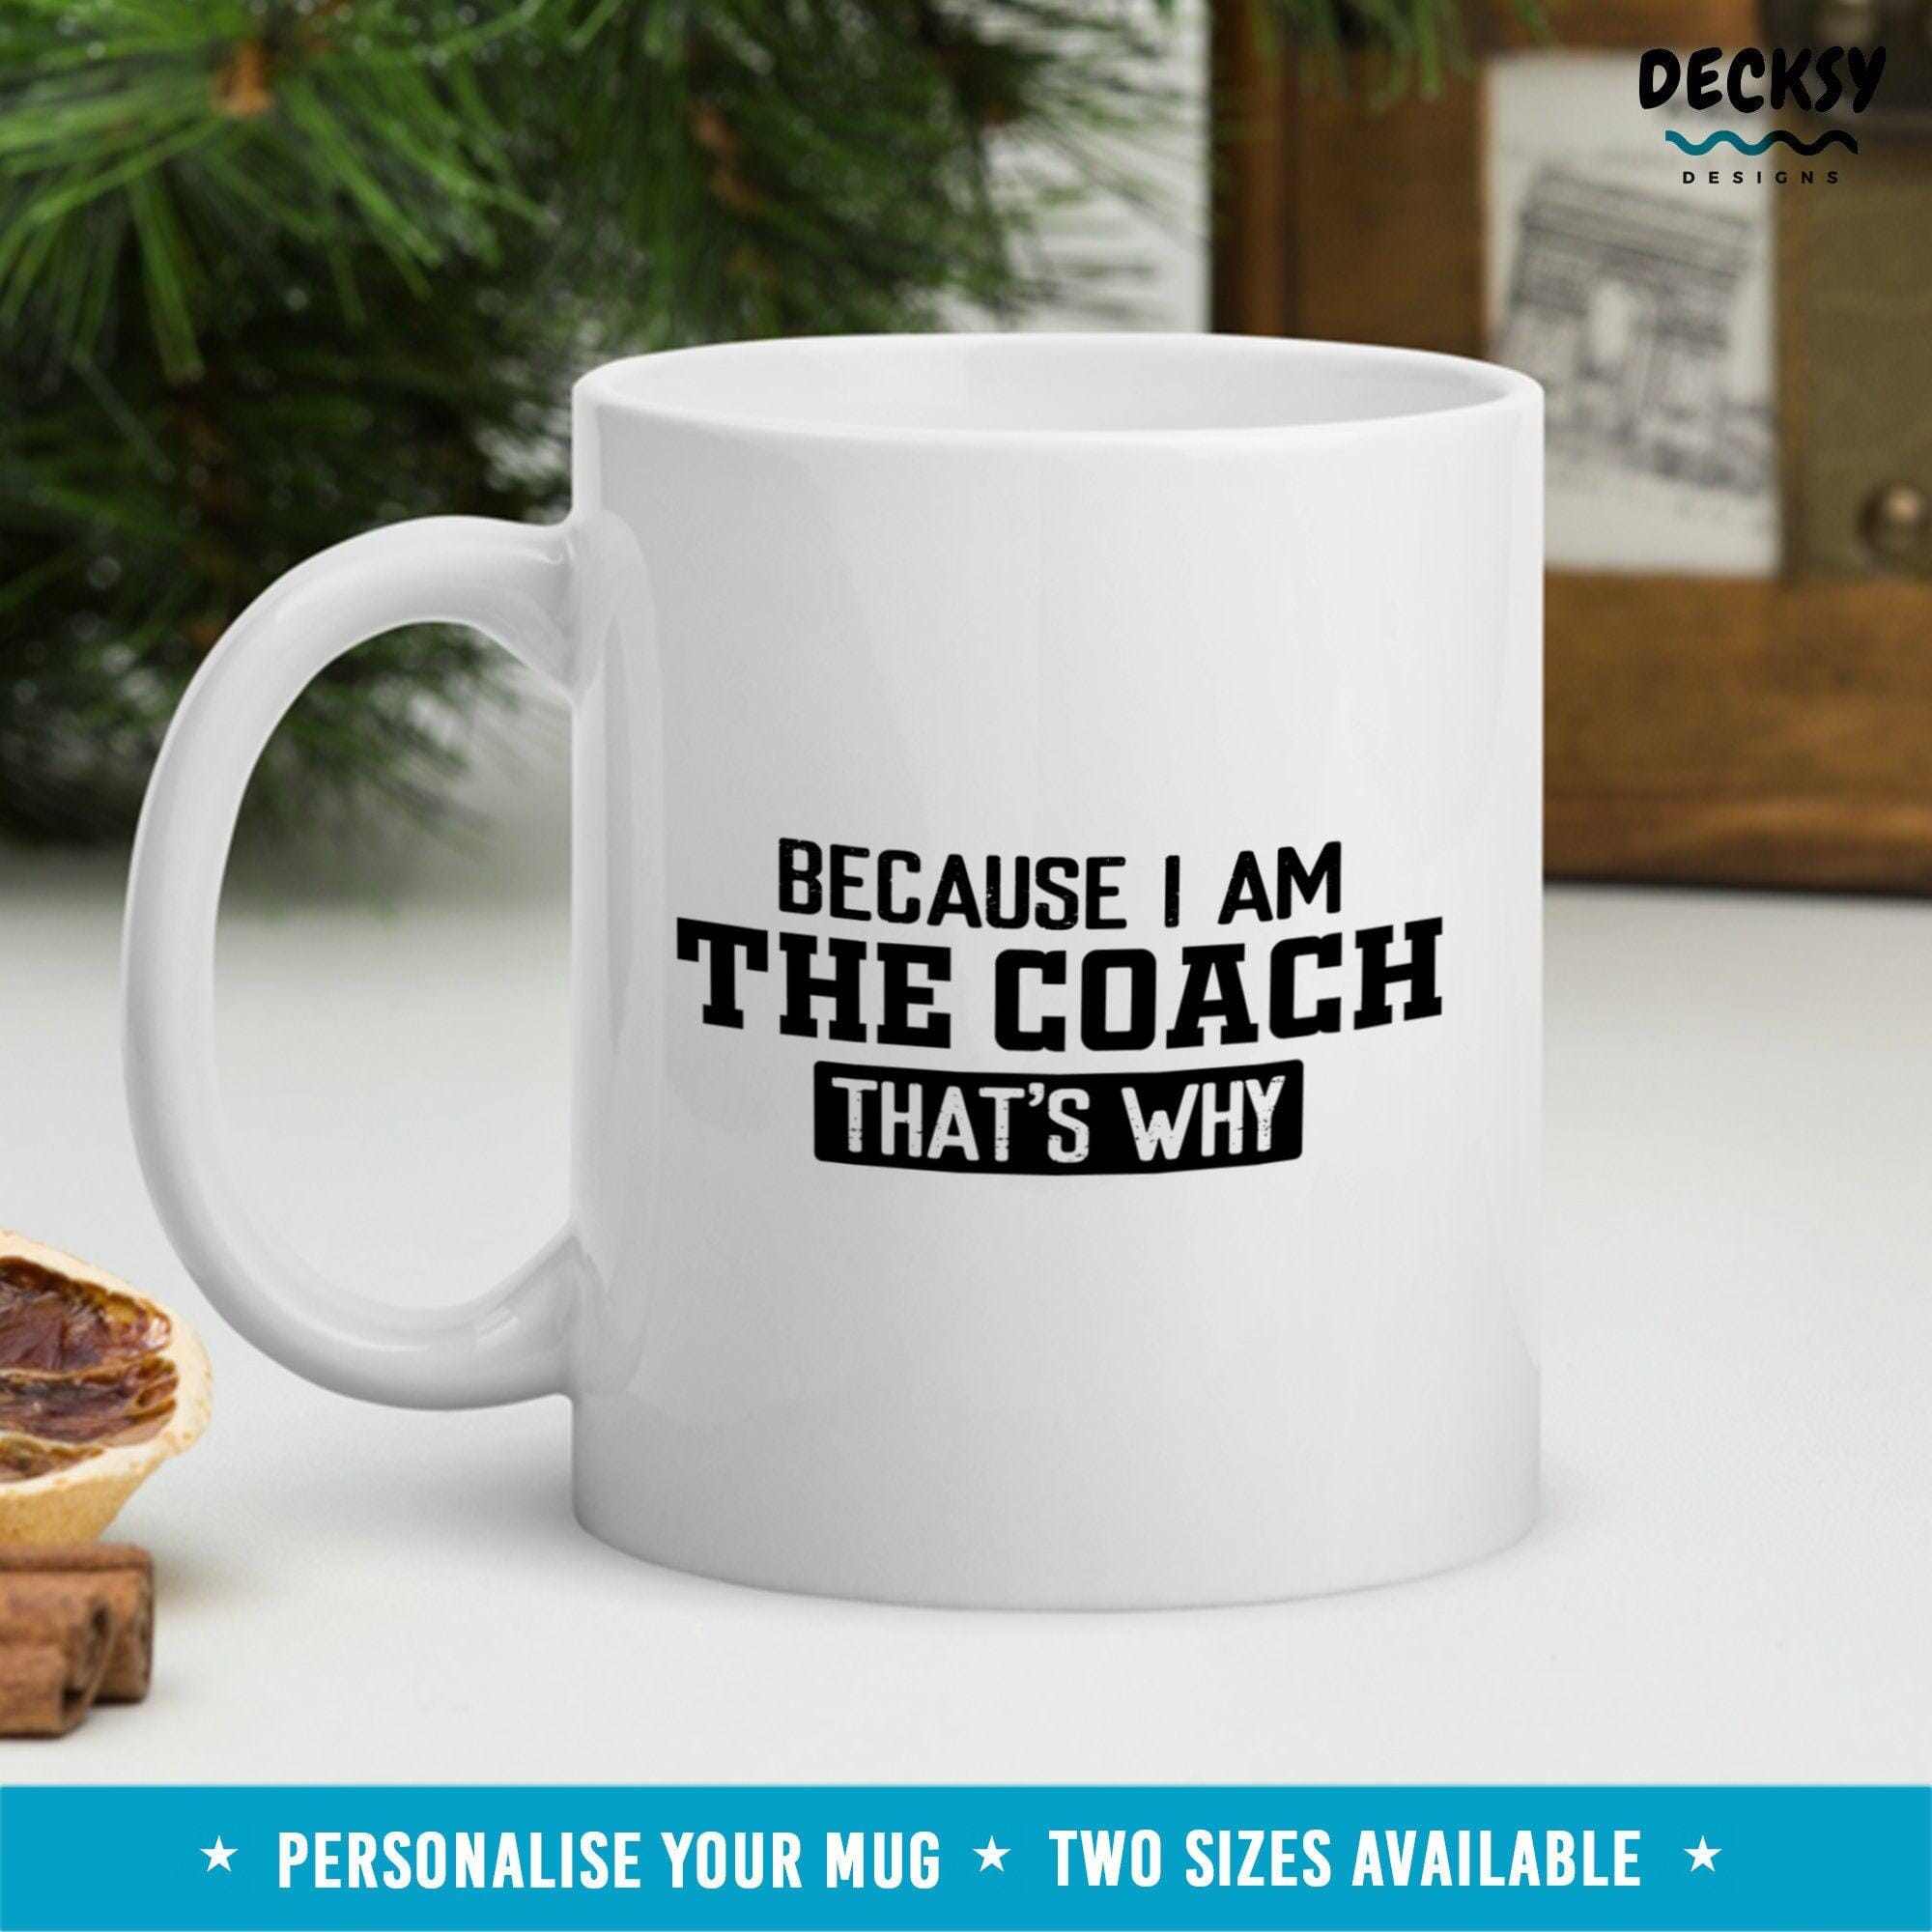 Coach Coffee Mug, Custom Coach Gift-Home & Living:Kitchen & Dining:Drink & Barware:Drinkware:Mugs-DecksyDesigns-White Mug 11 oz-NO PERSONALISATION-DecksyDesigns